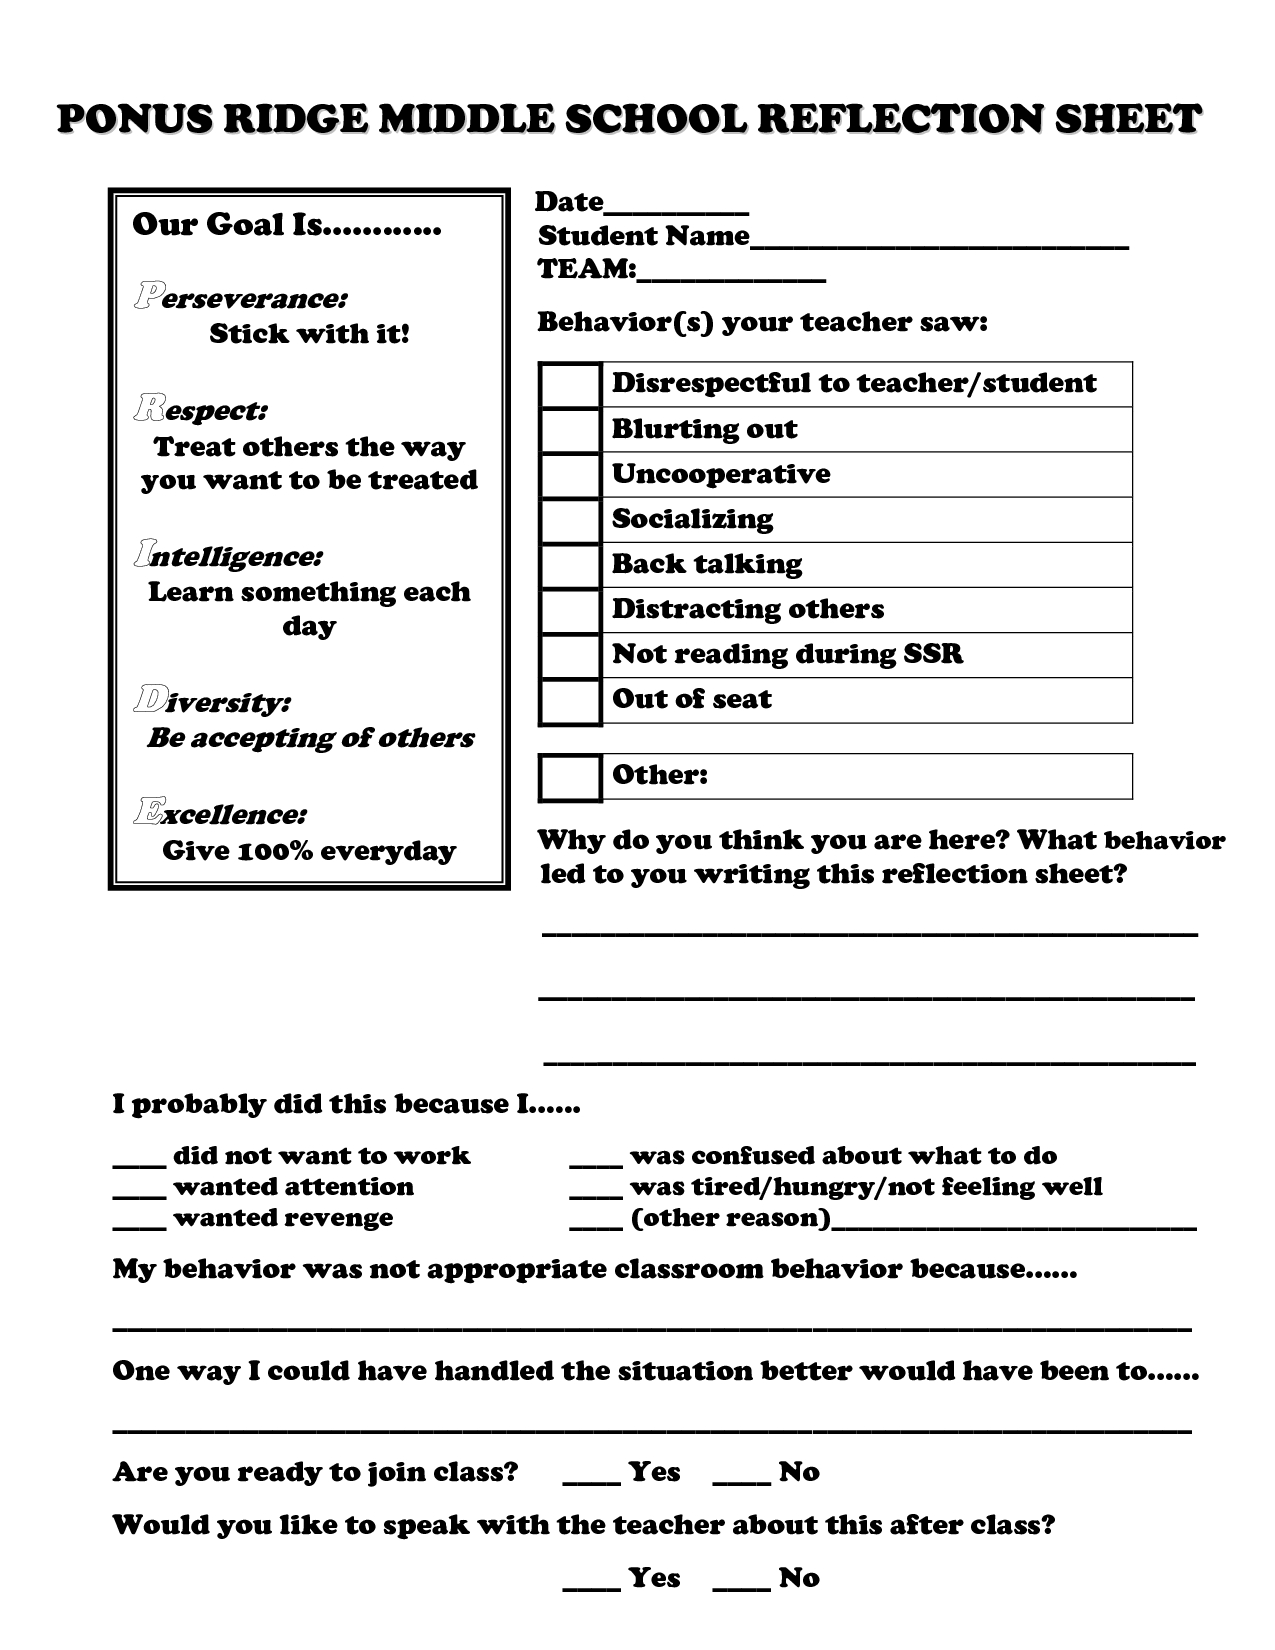 School Reflection Sheet Ponus Ridge Middle School Reflection Sheet in Conducut Chart For Play School